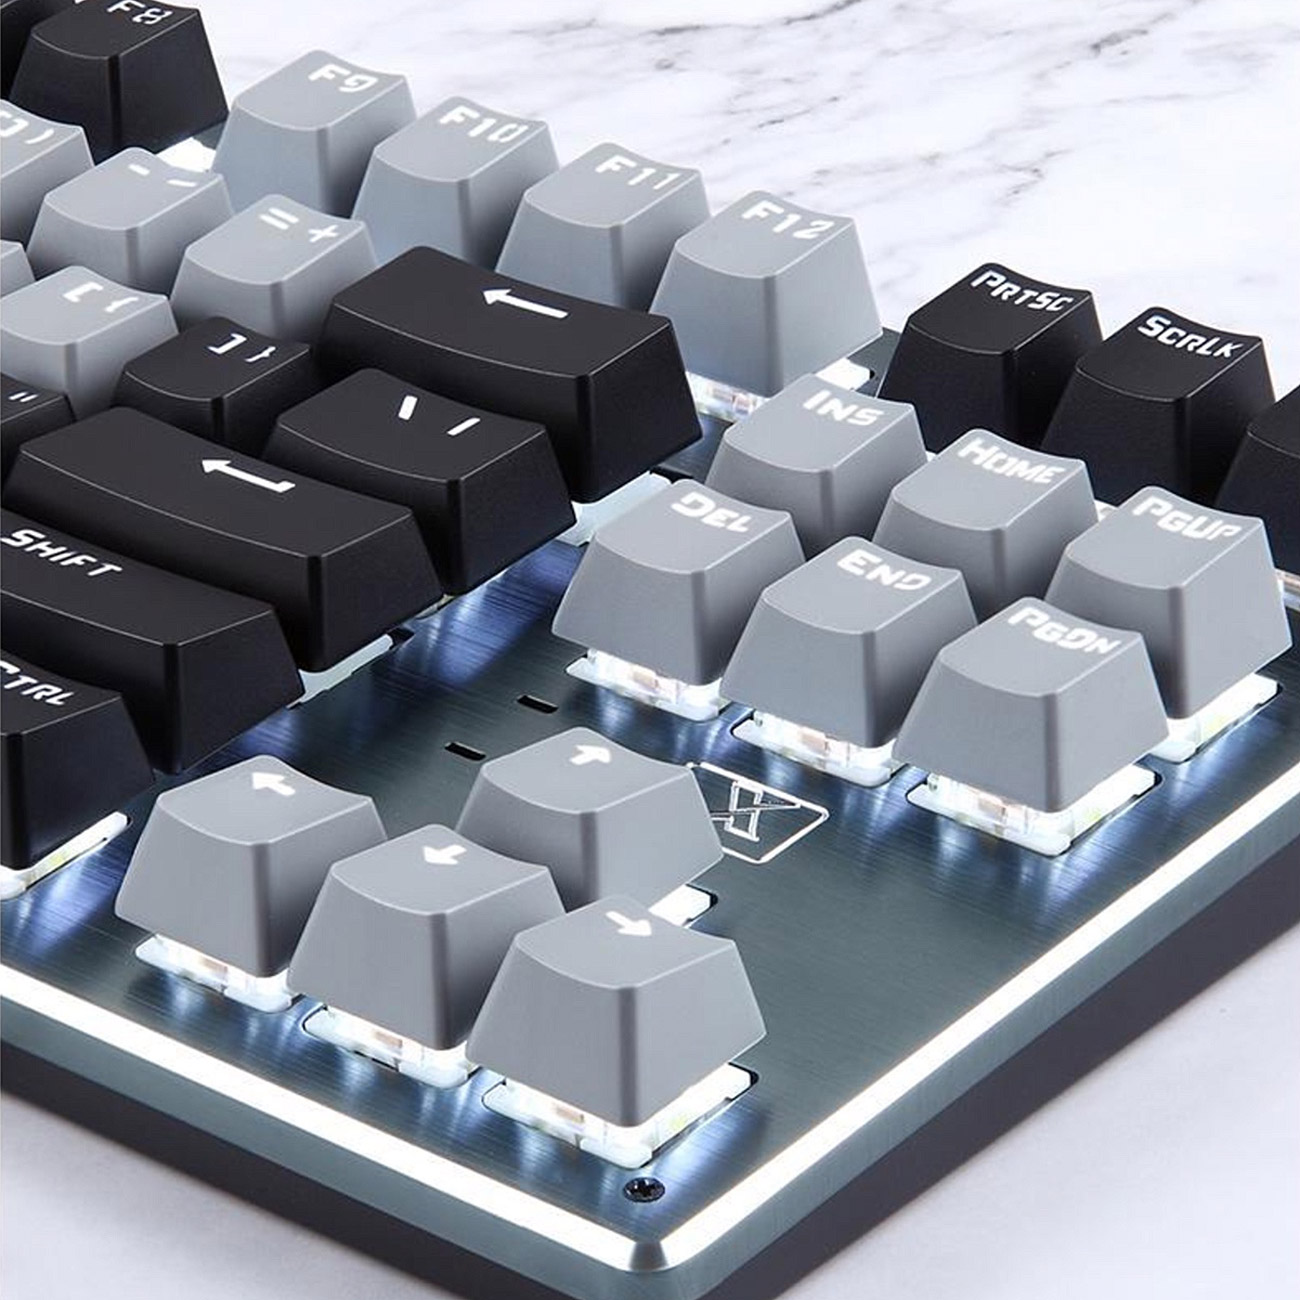 E-sport 87-key Mechanical Keyboard